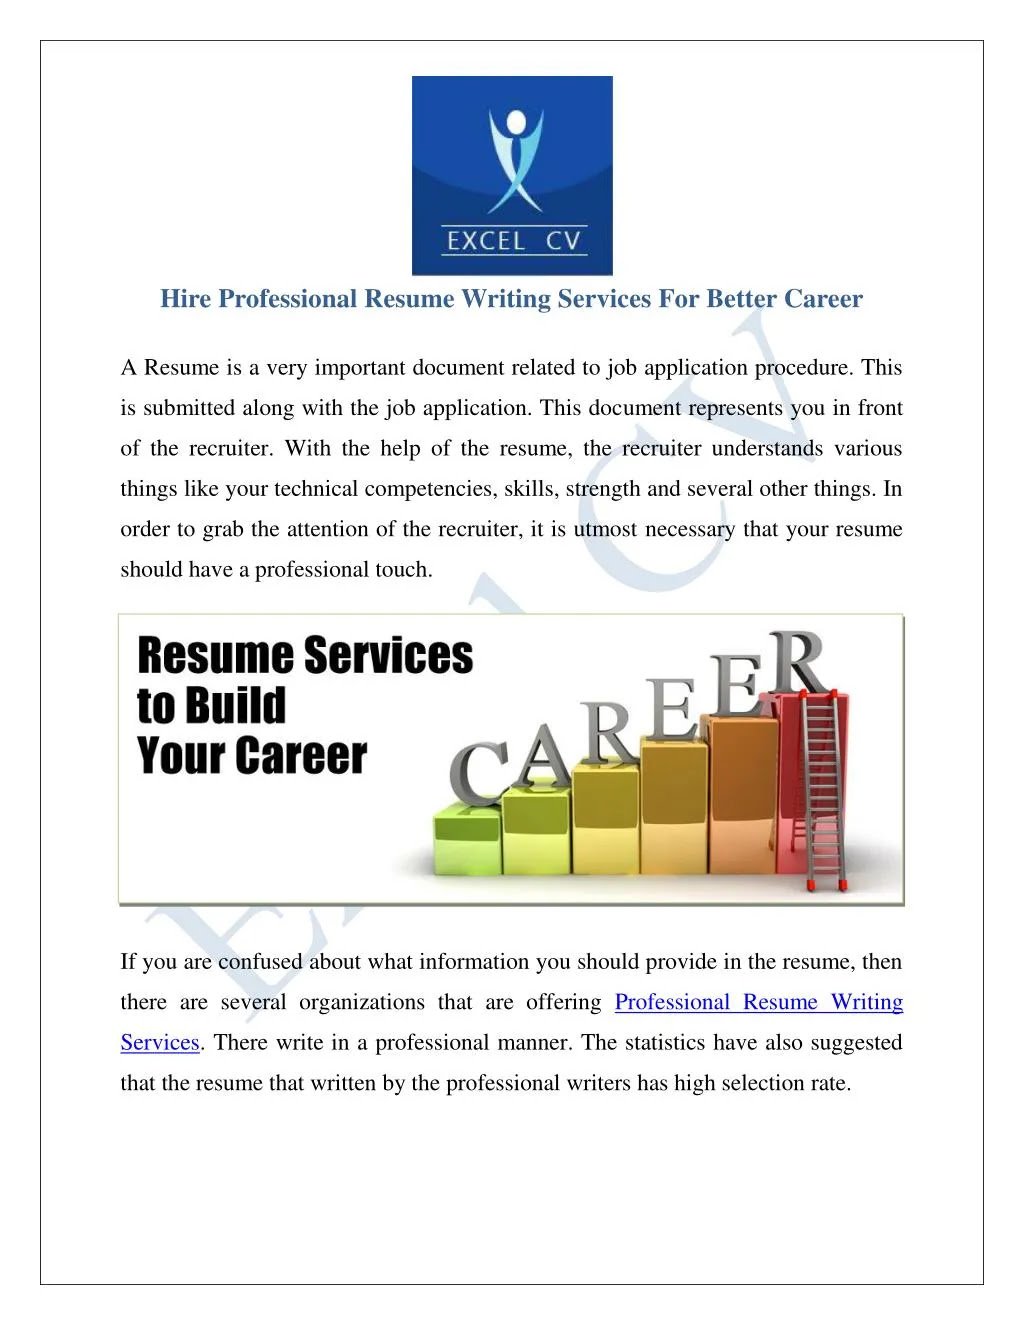 Professional resume writing services tucson az